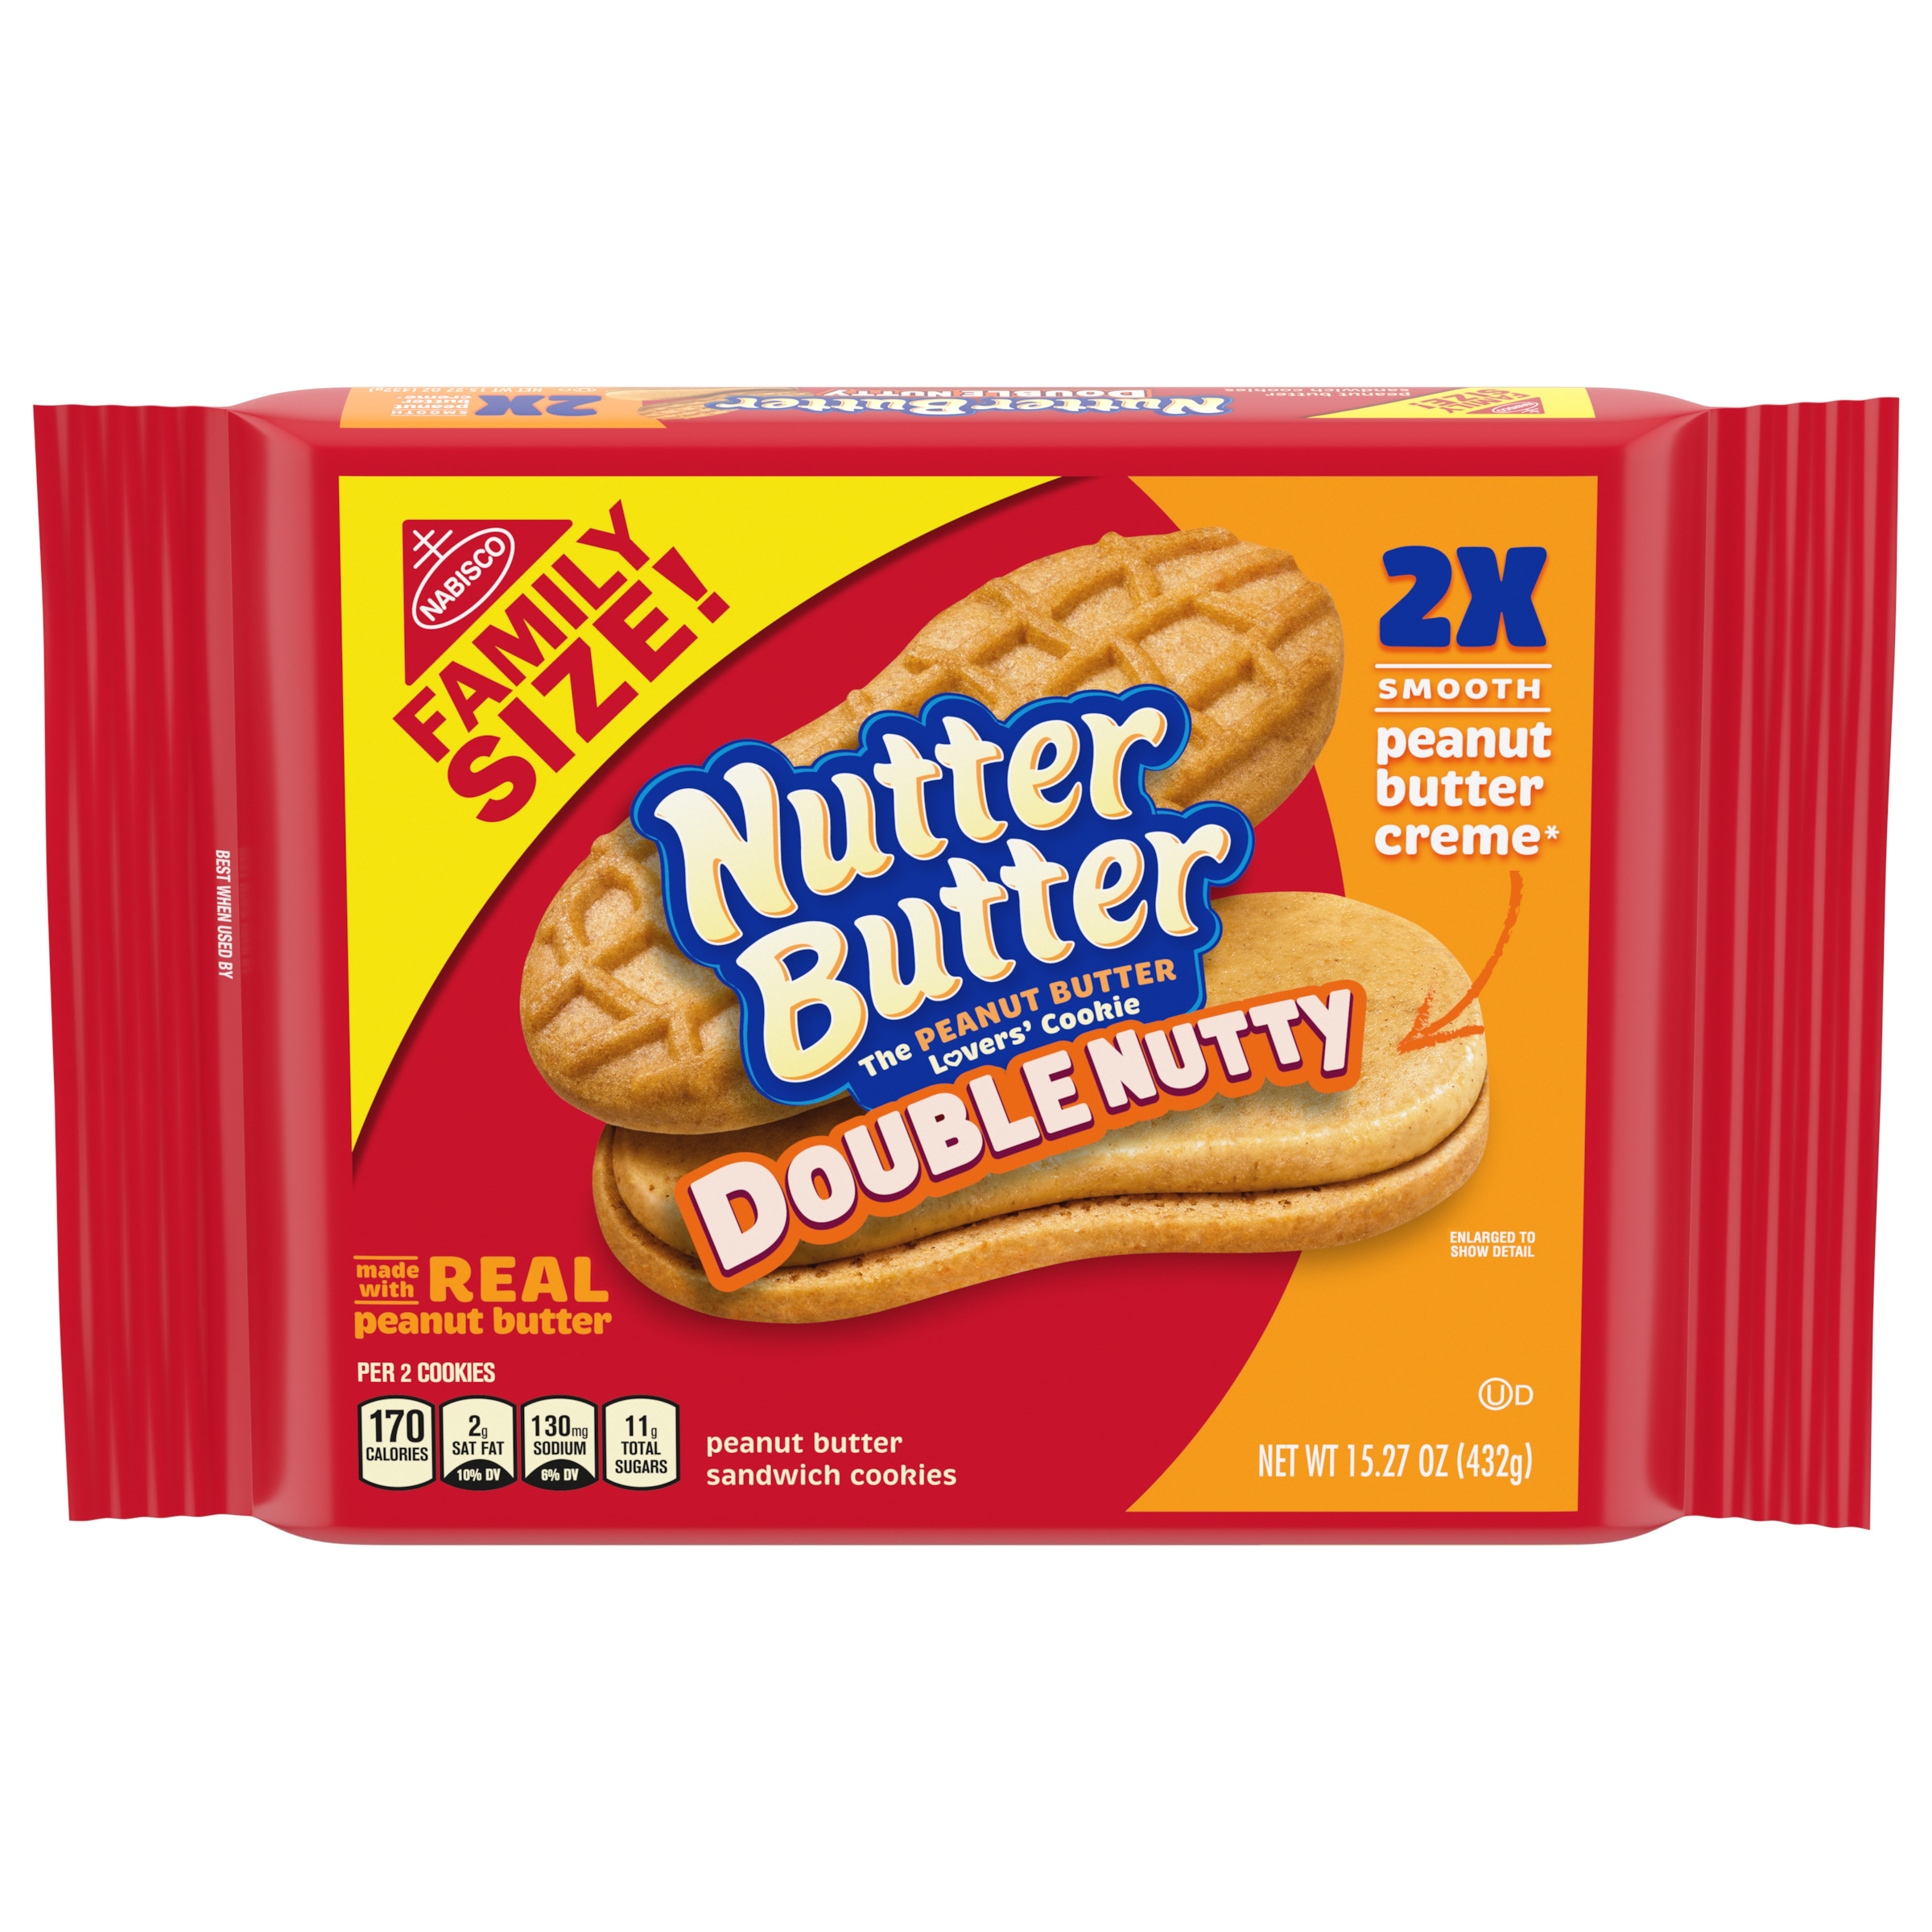 Nutter Butter Double Nutty Peanut Butter Sandwich Cookies, Family Size, 15.27 oz